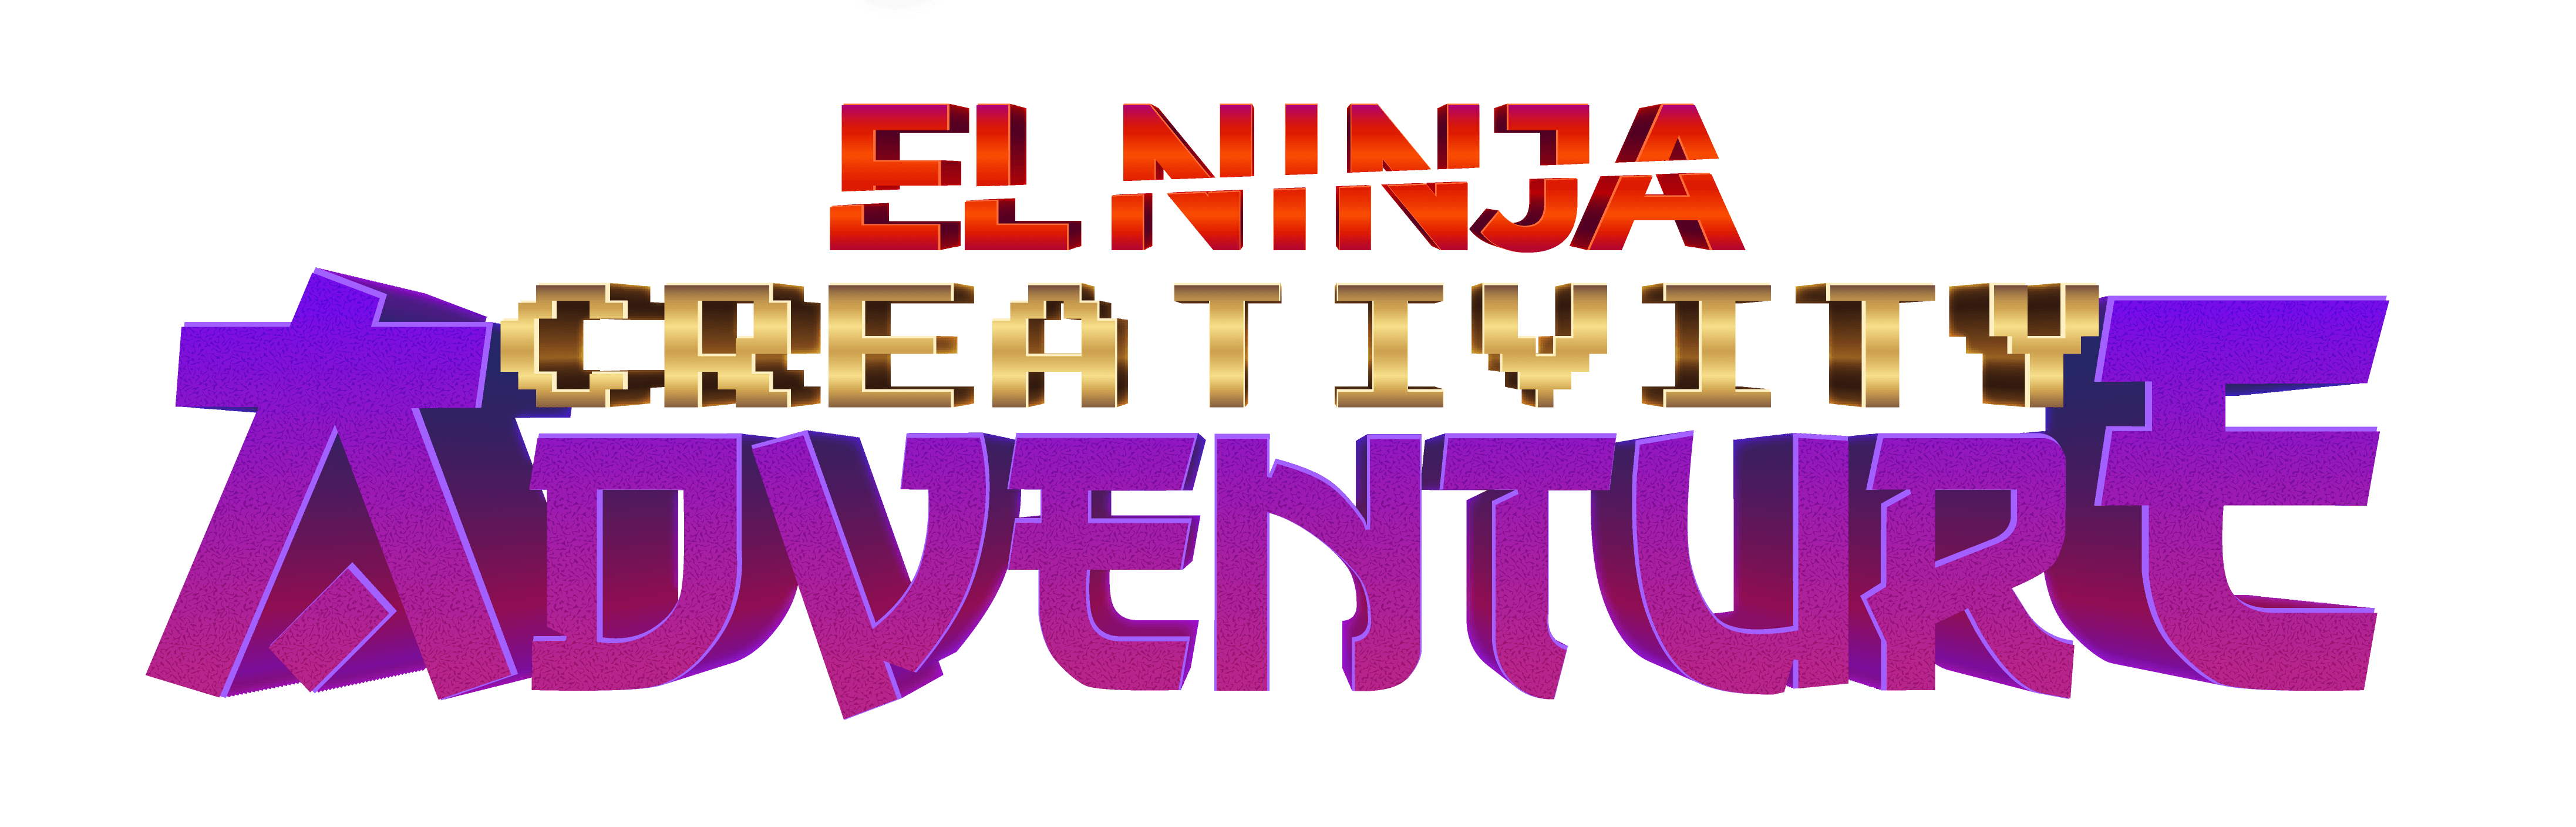 (c) Creativityadventure.ninja